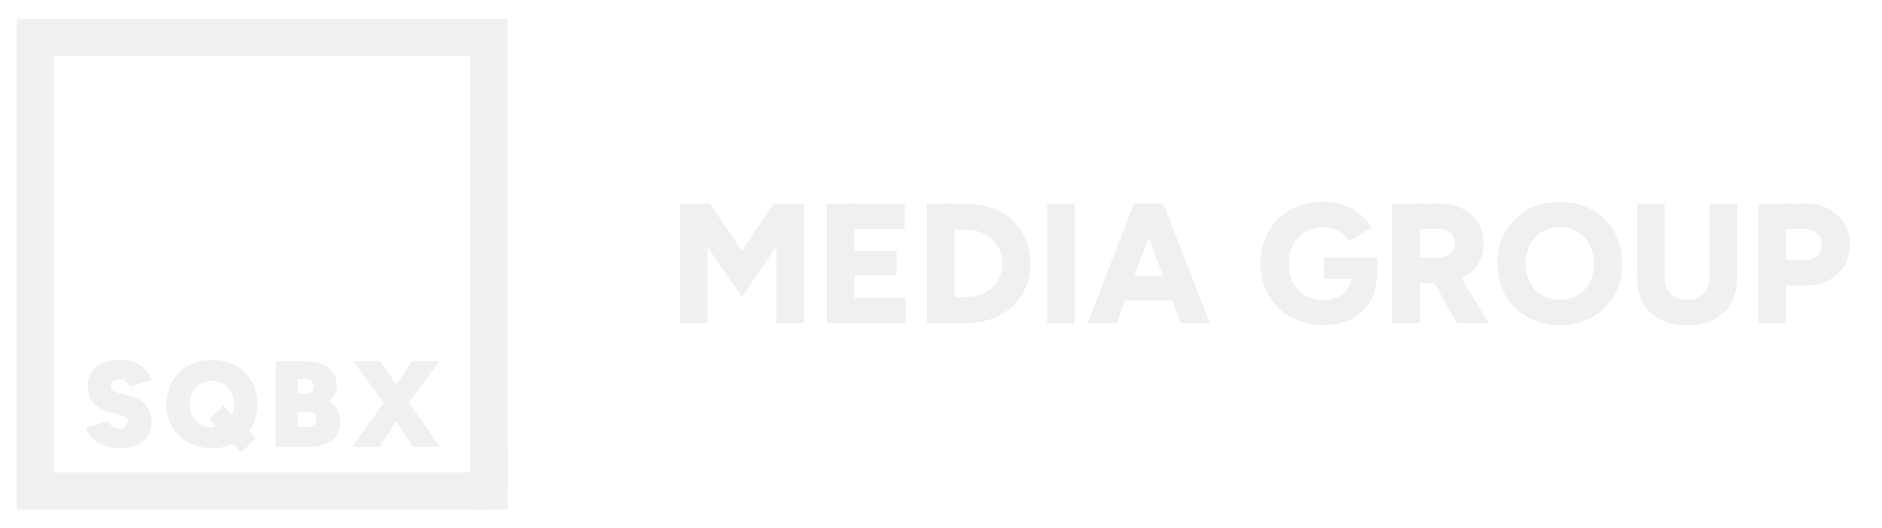 SQBX Media Group: Logo